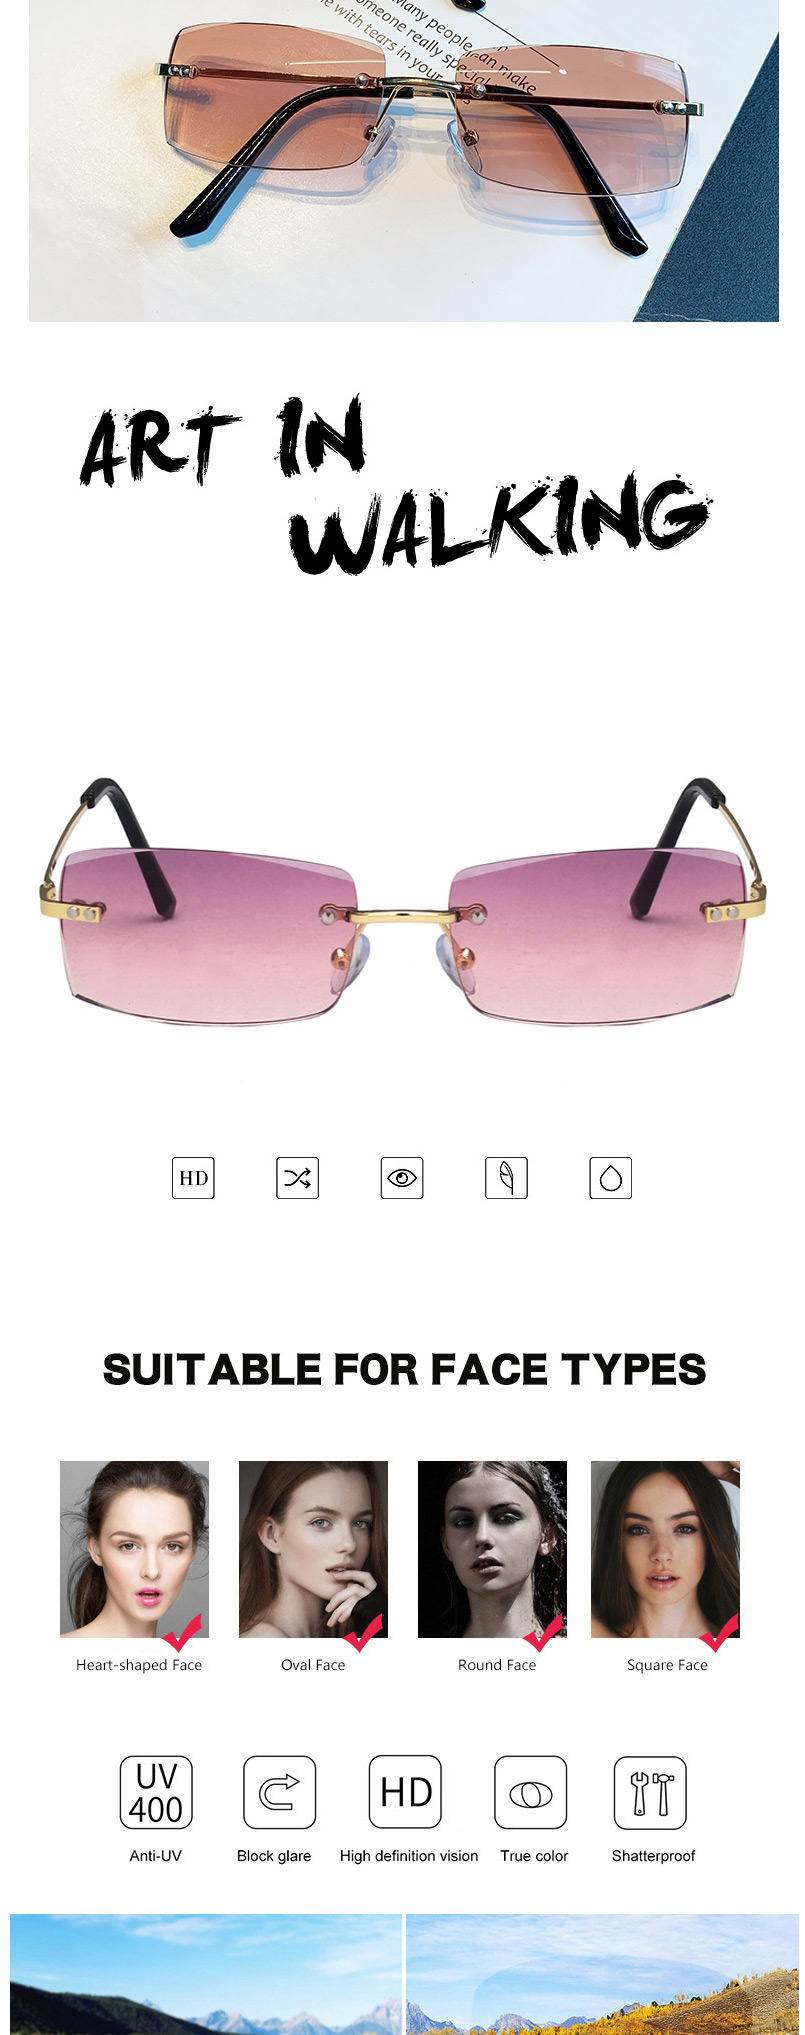 Fashion Gradually Purple Trimmed Rimless Small Frame Sunglasses,Women Sunglasses